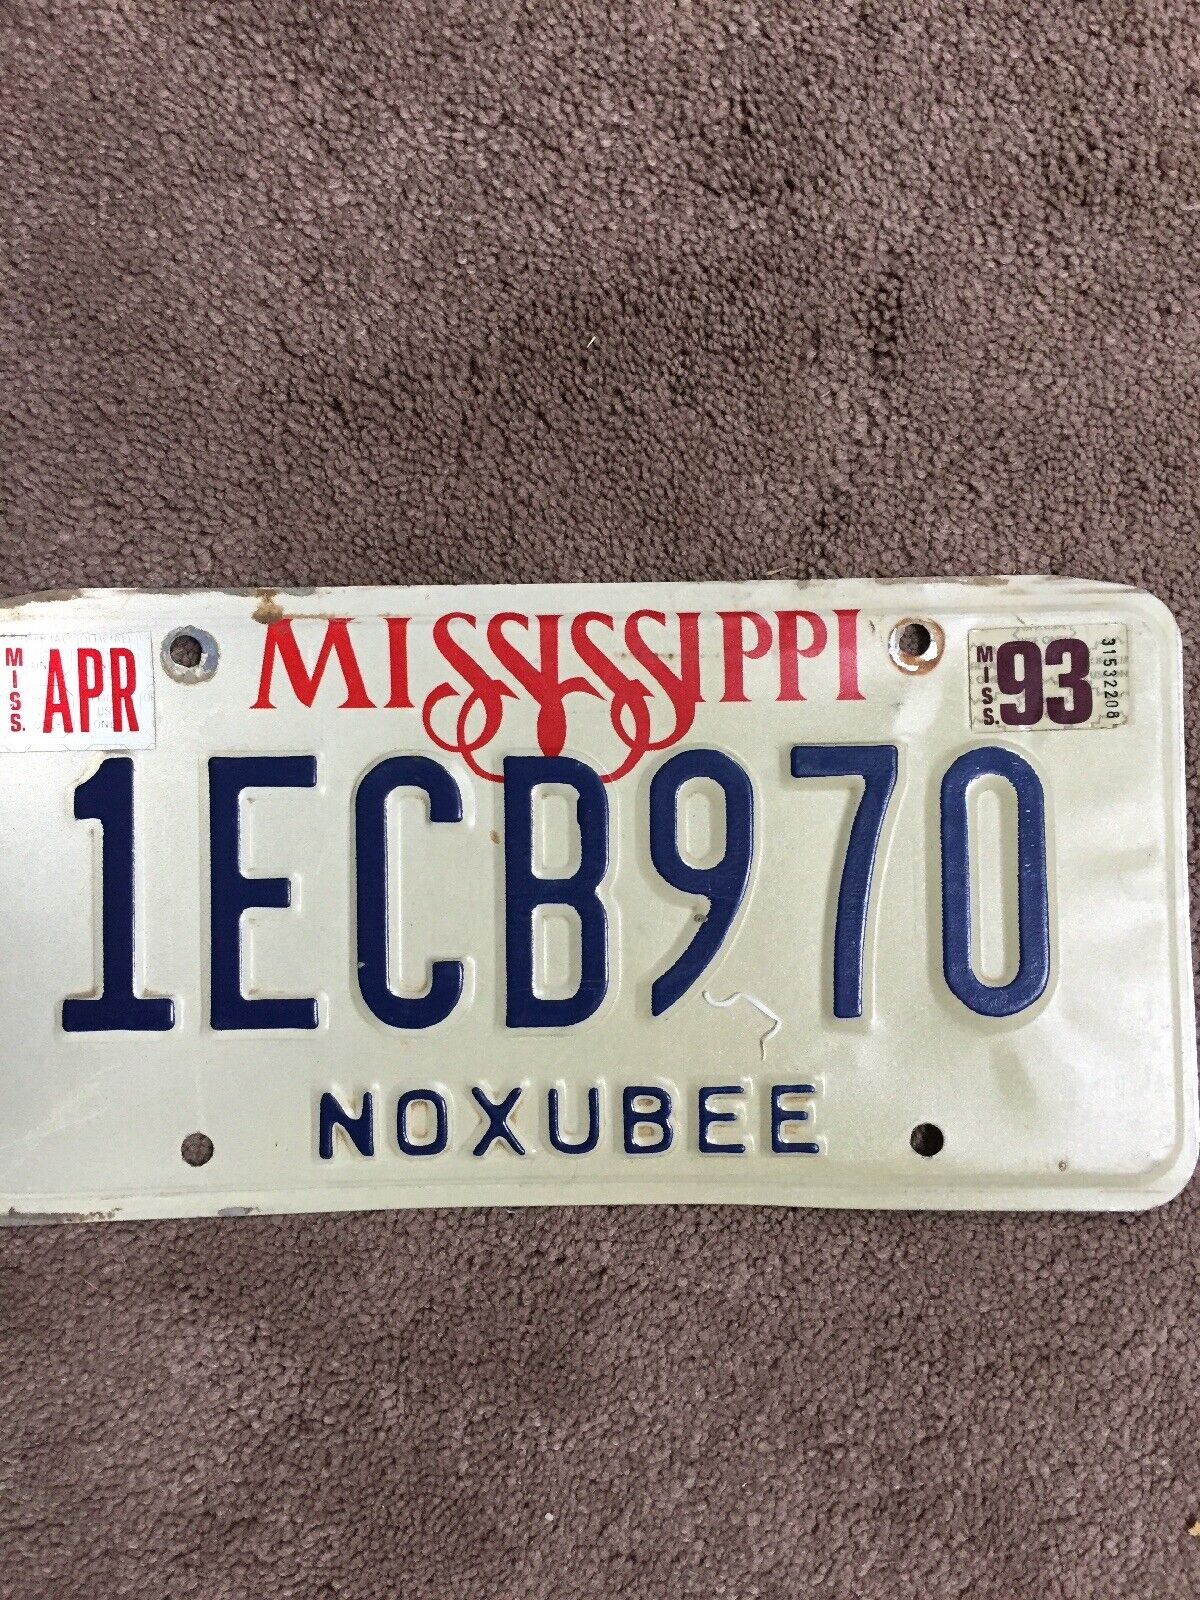 1993 Mississippi License Plate - 1ECB 970 - Nice